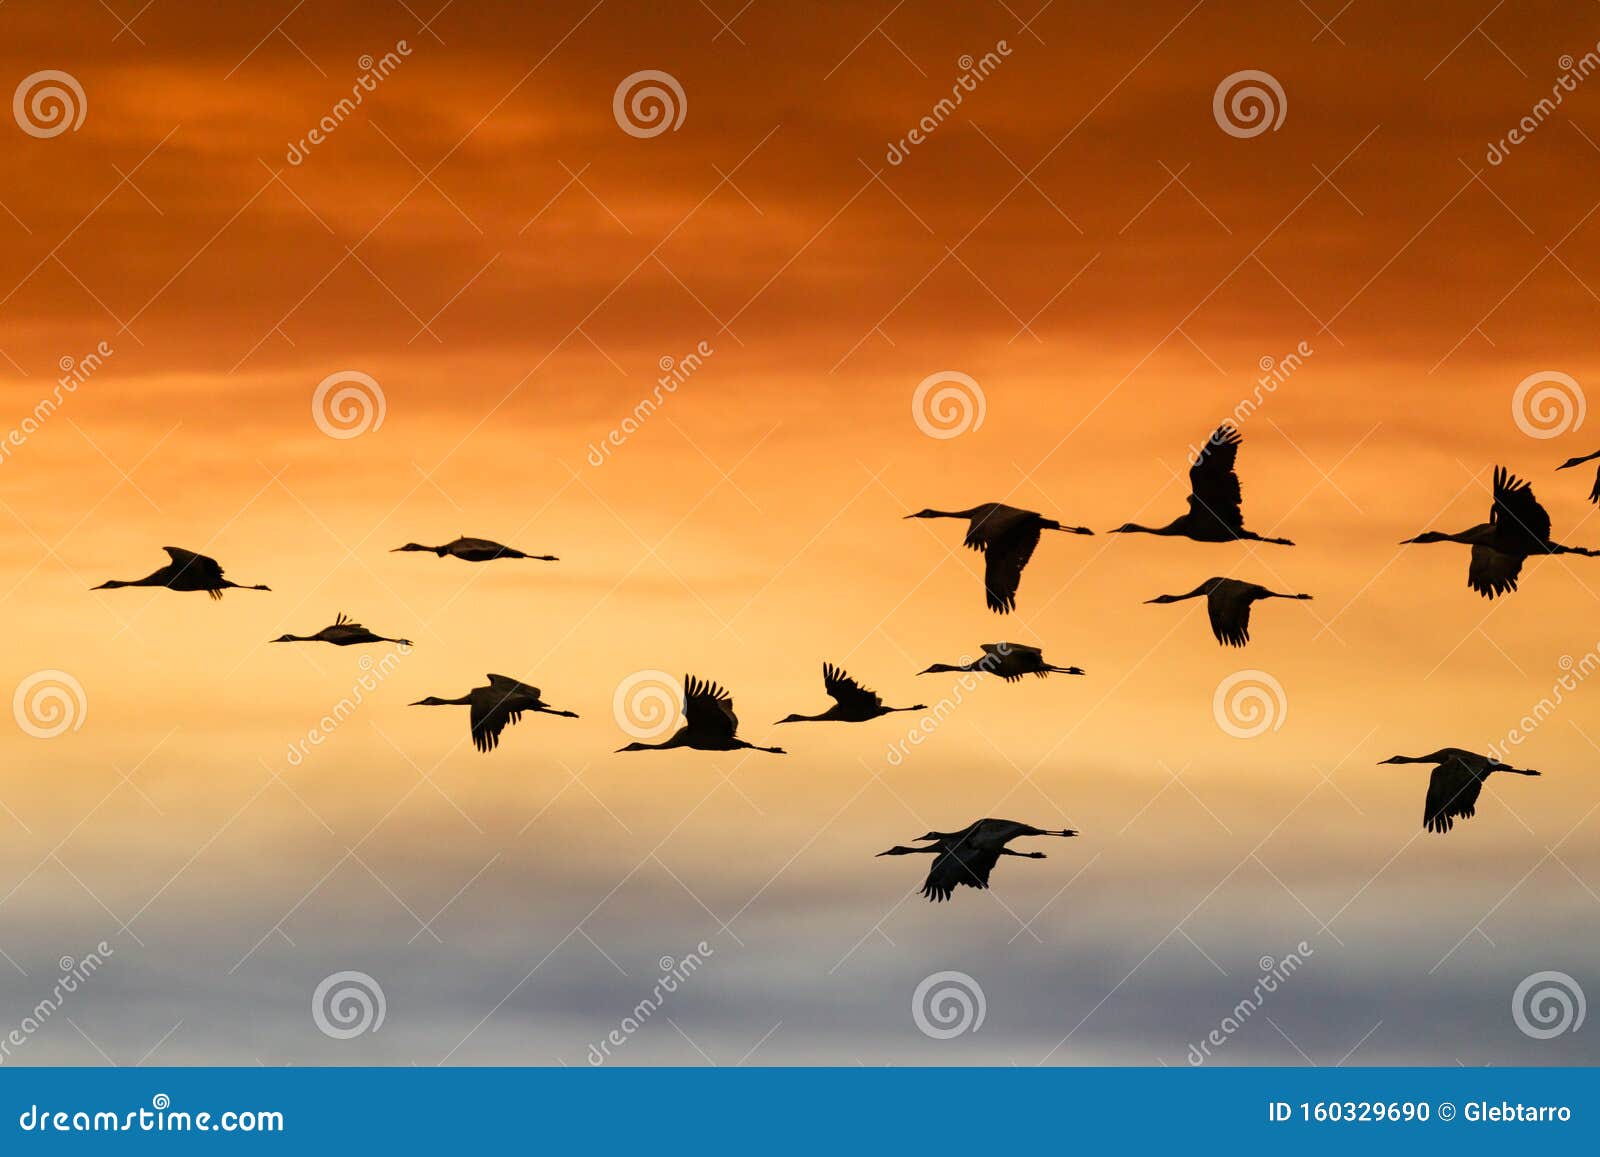 sandhill cranes flying at bosque del apache national wildlife refuge at sunset